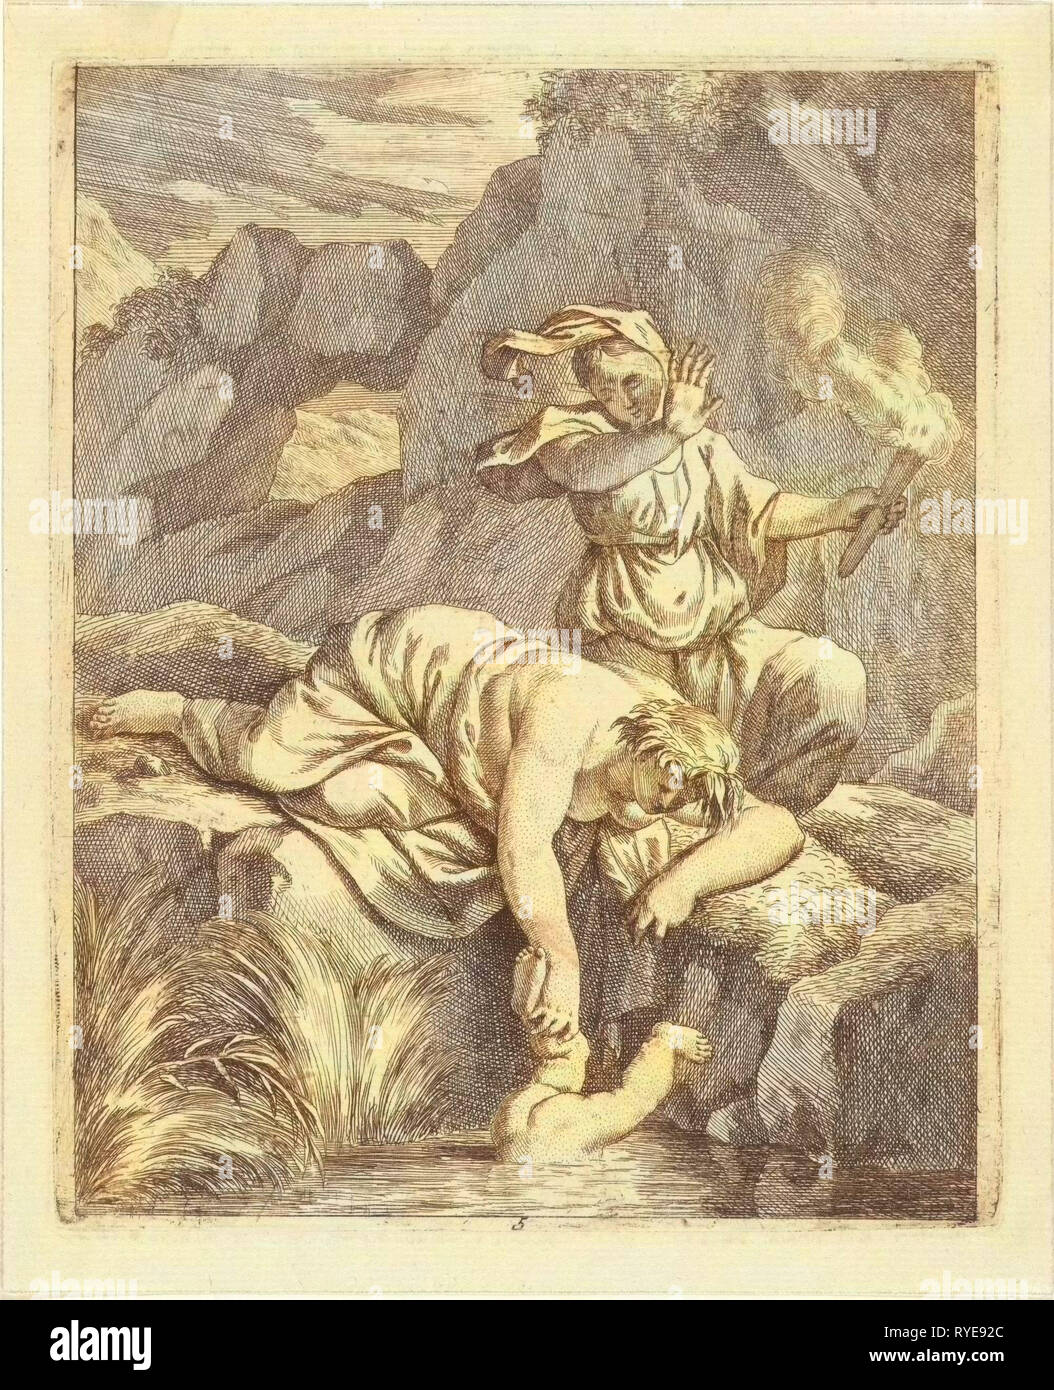 Thetis dips Achilles in the Styx, J. Alexander Janssens, Victor Honoré Janssens, c. 1700 Stock Photo